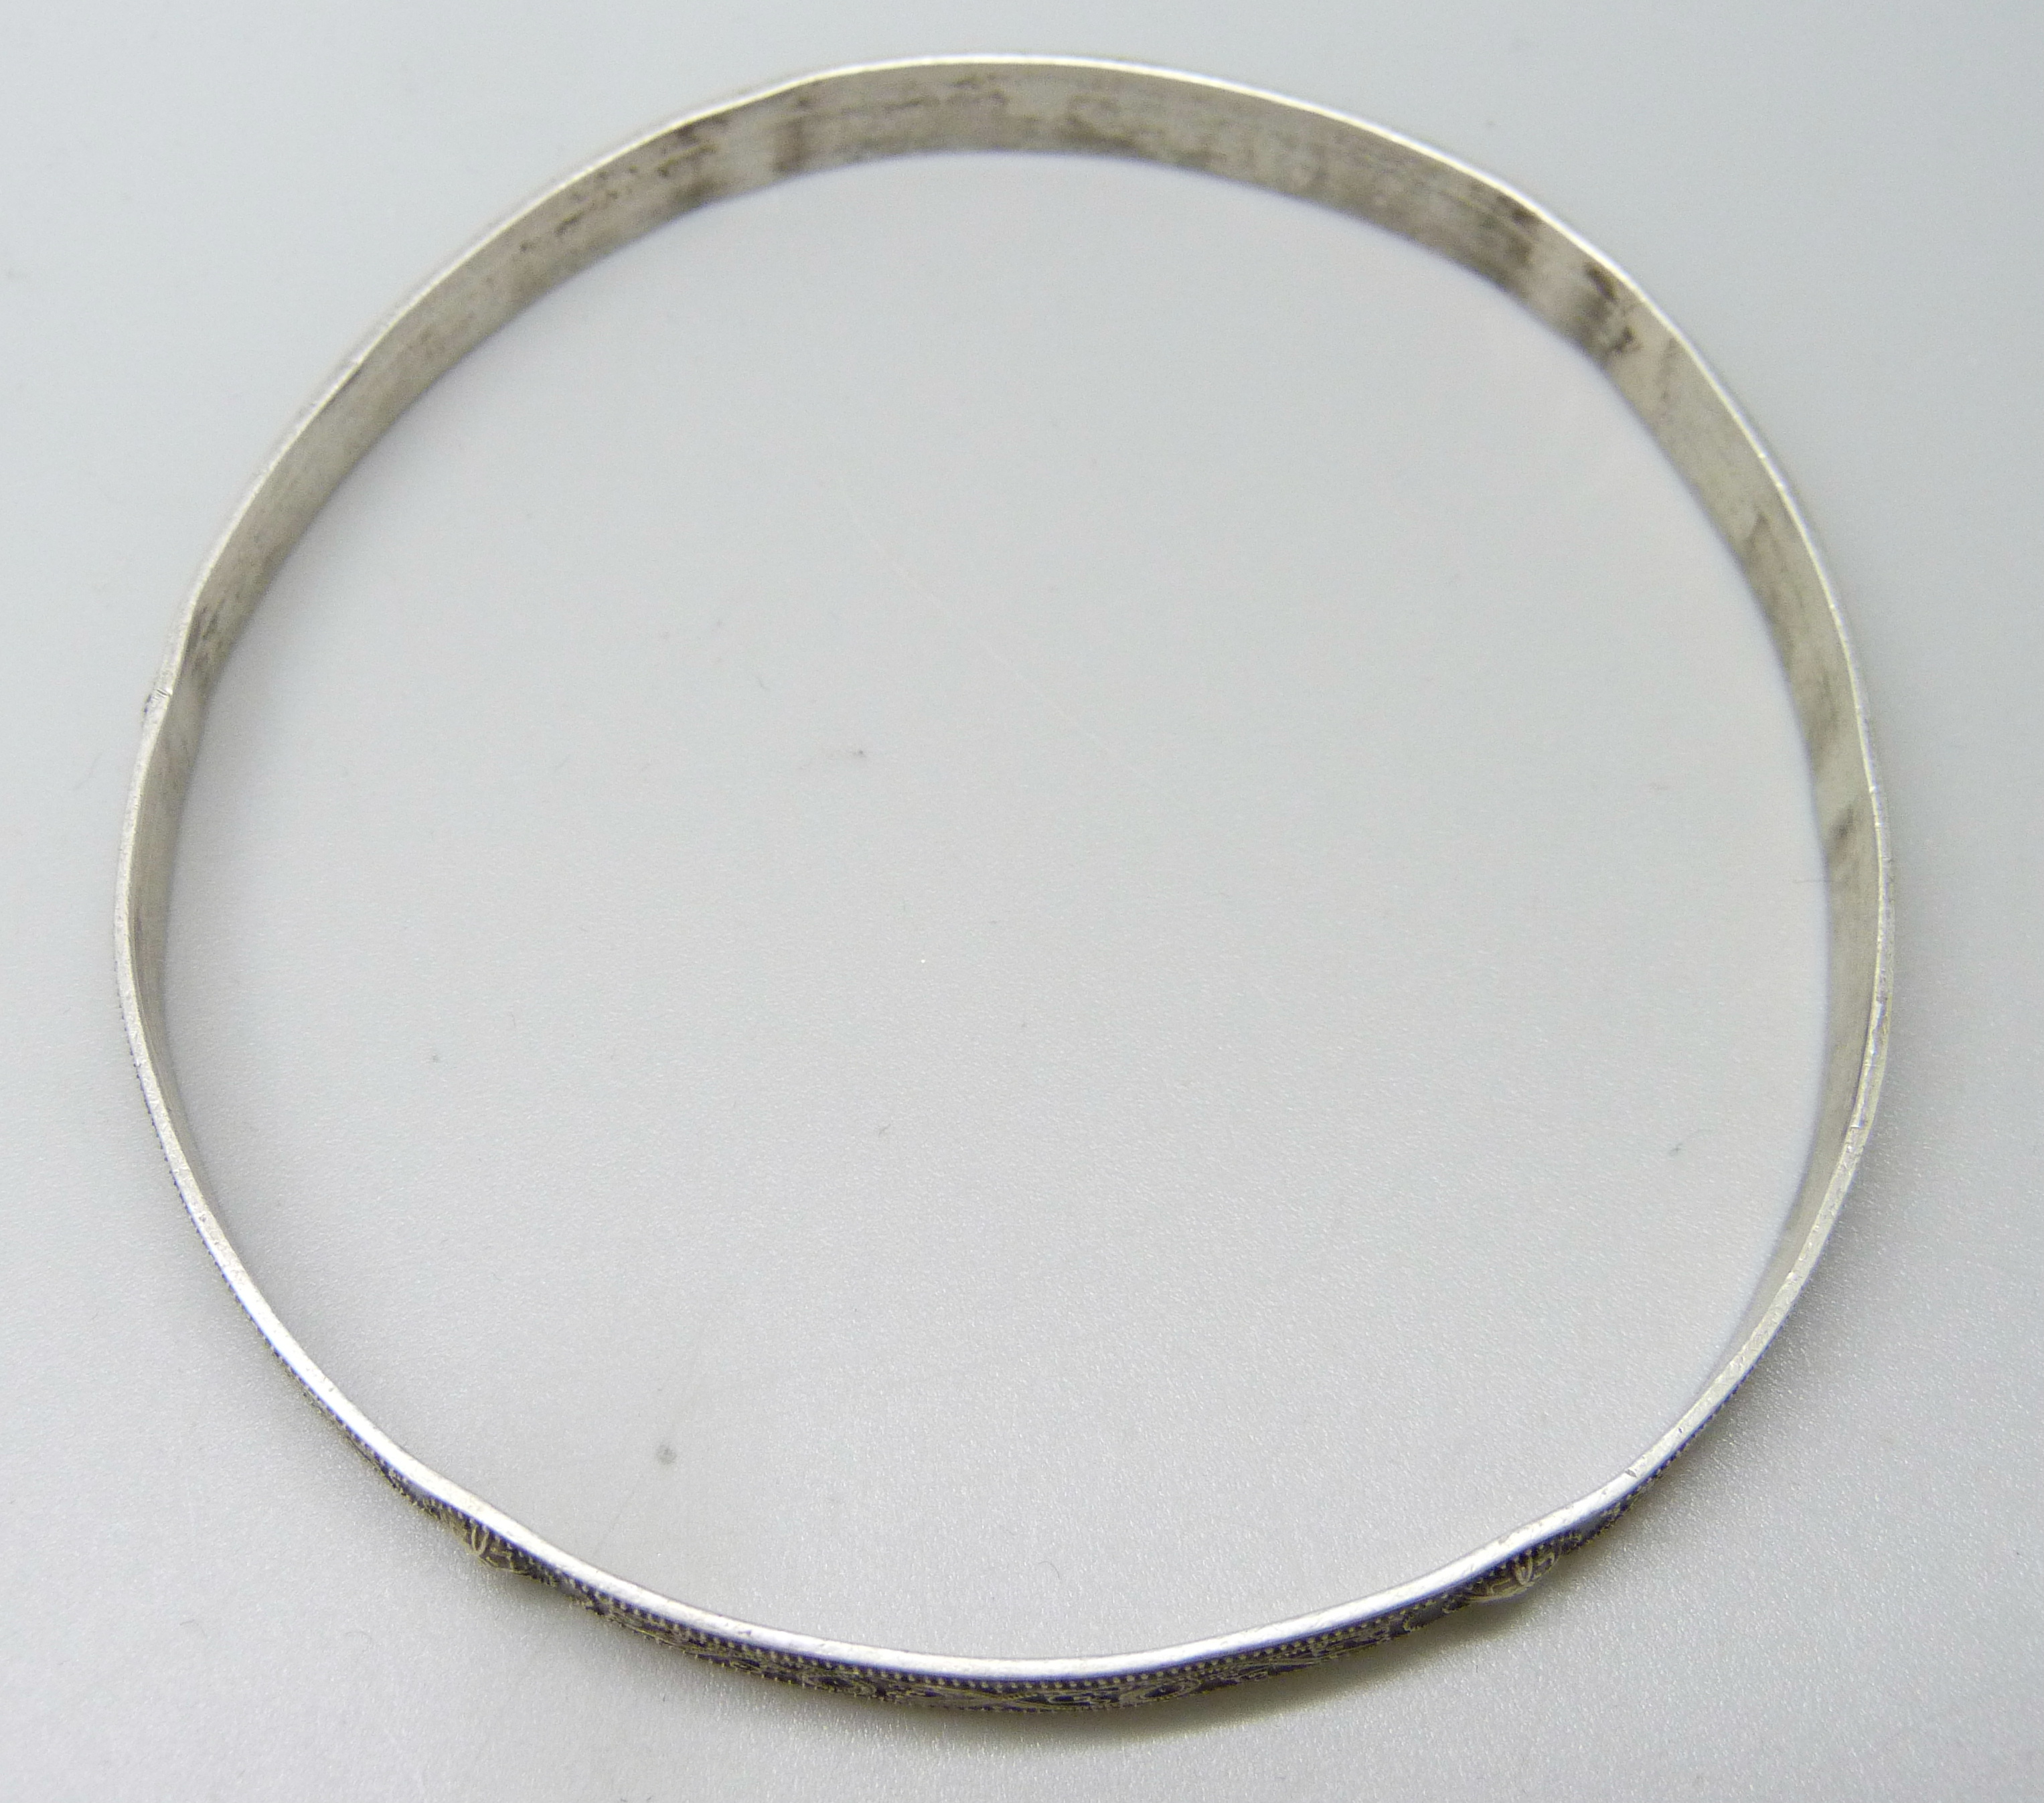 A 925 silver Celtic design bangle, stamped 'T' - Image 3 of 4